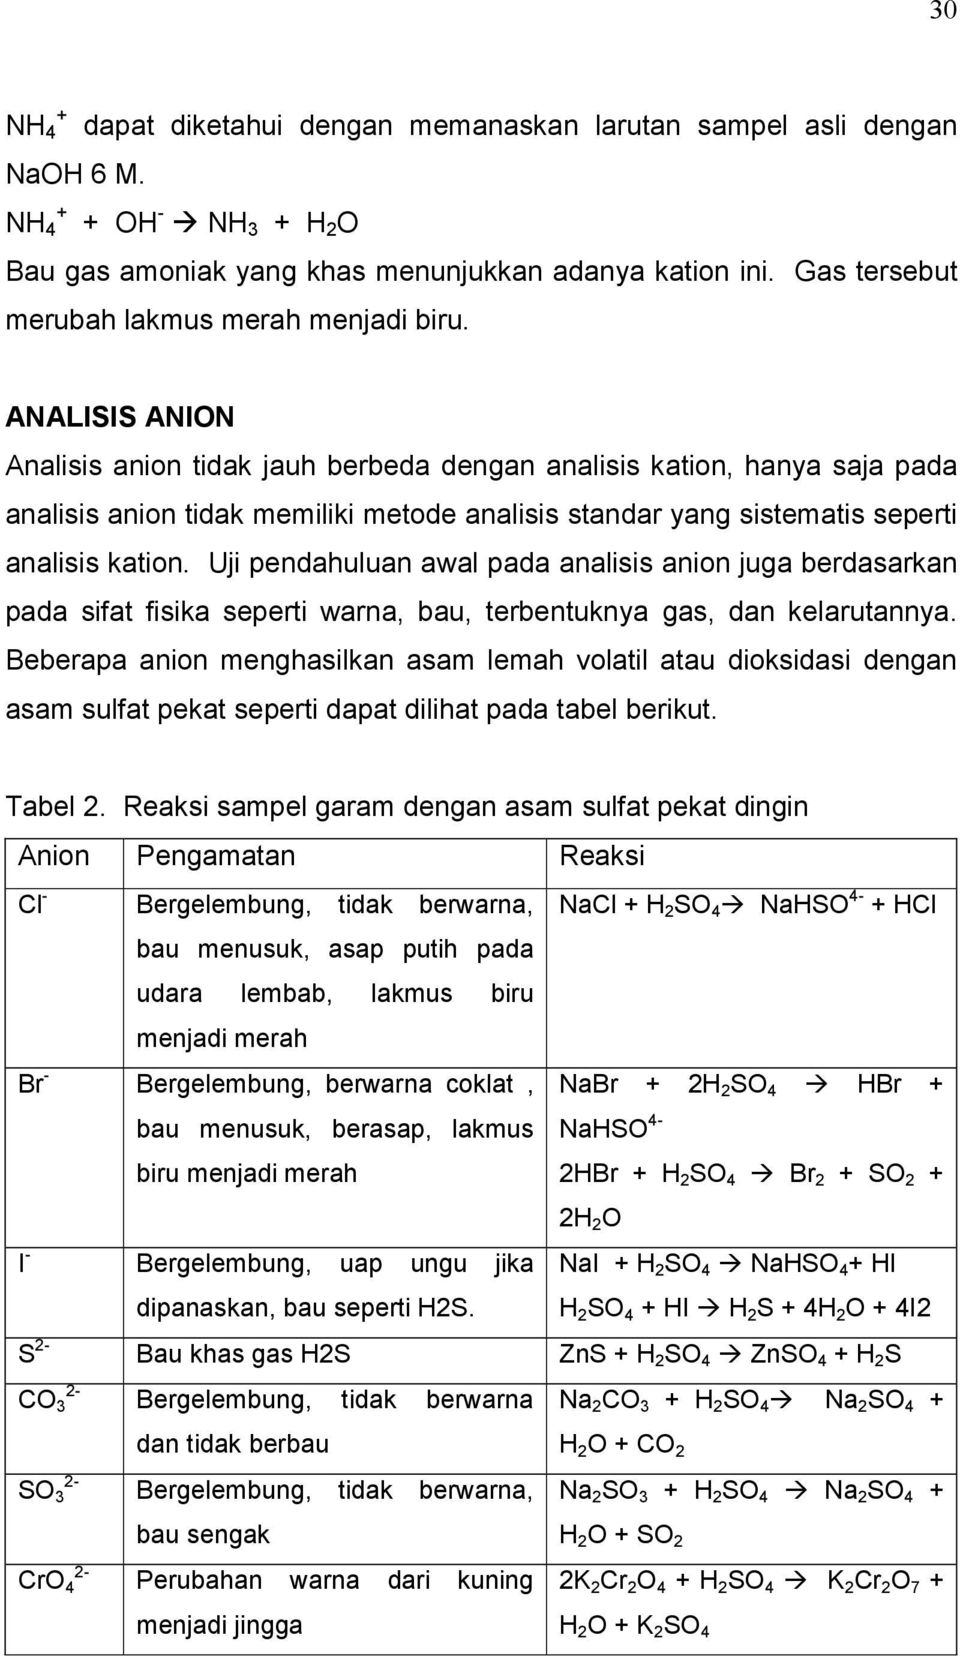 Daftar kation dan anion